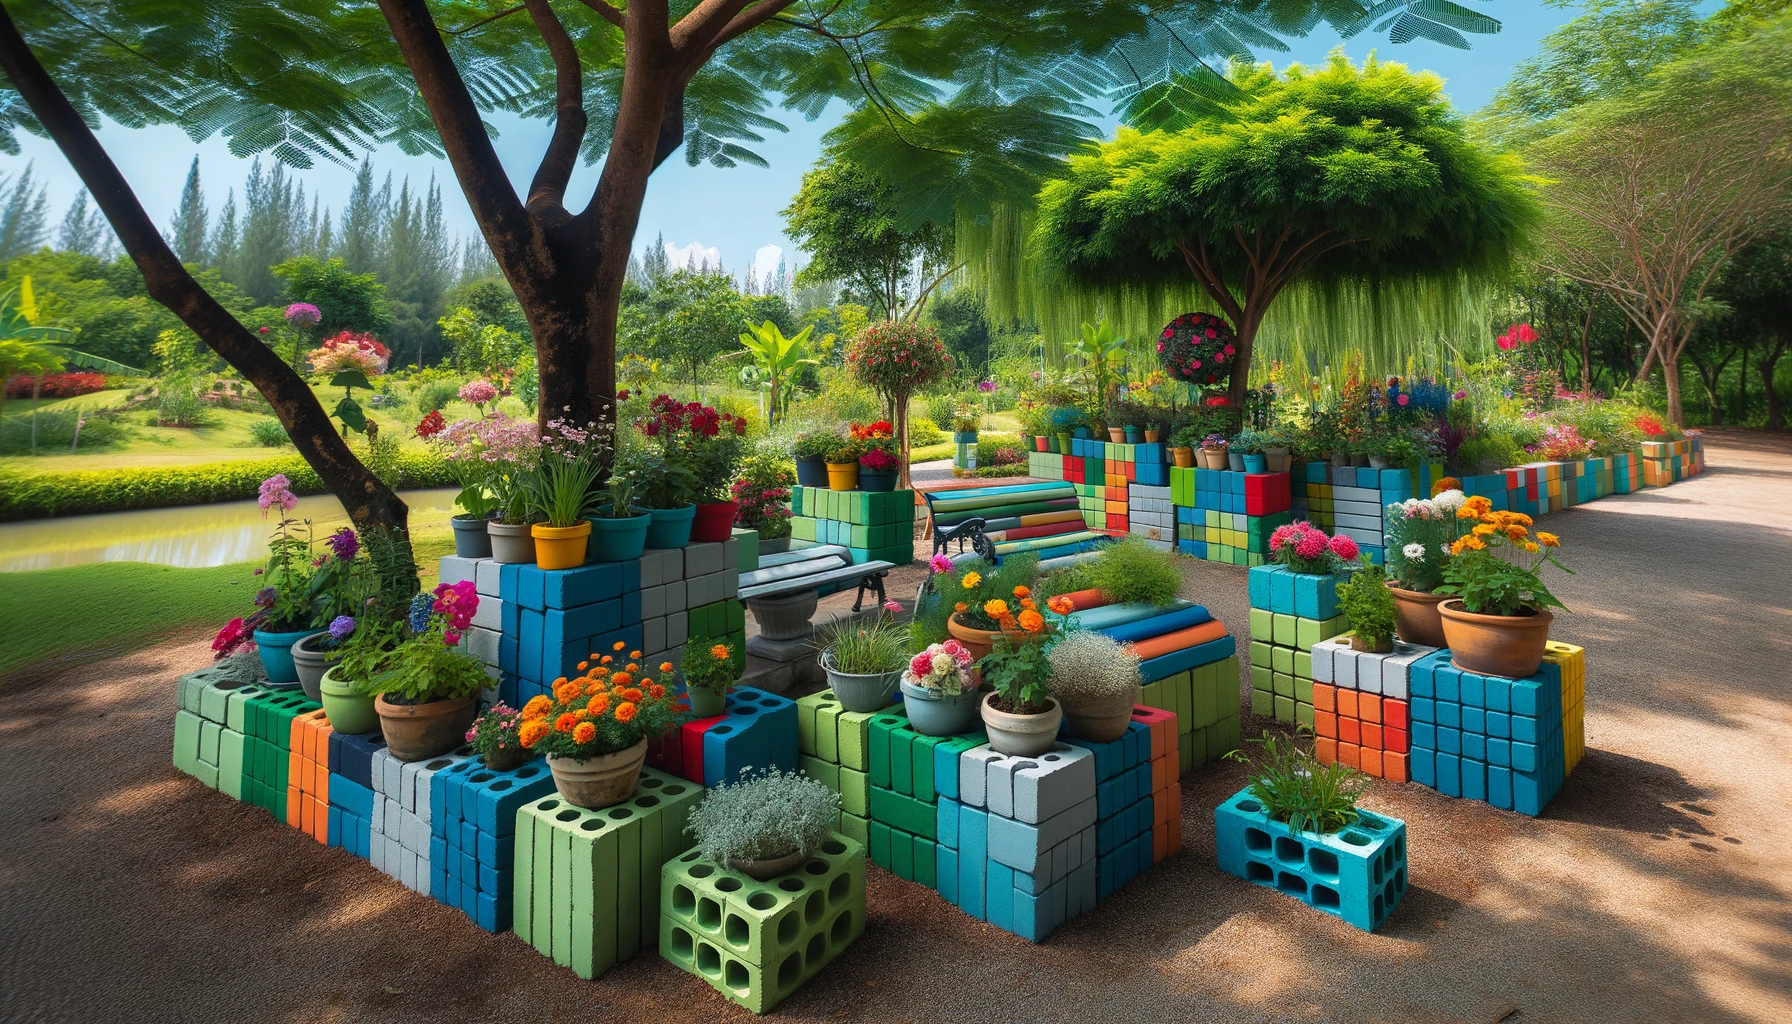 Painted Cinder Block Garden Ideas